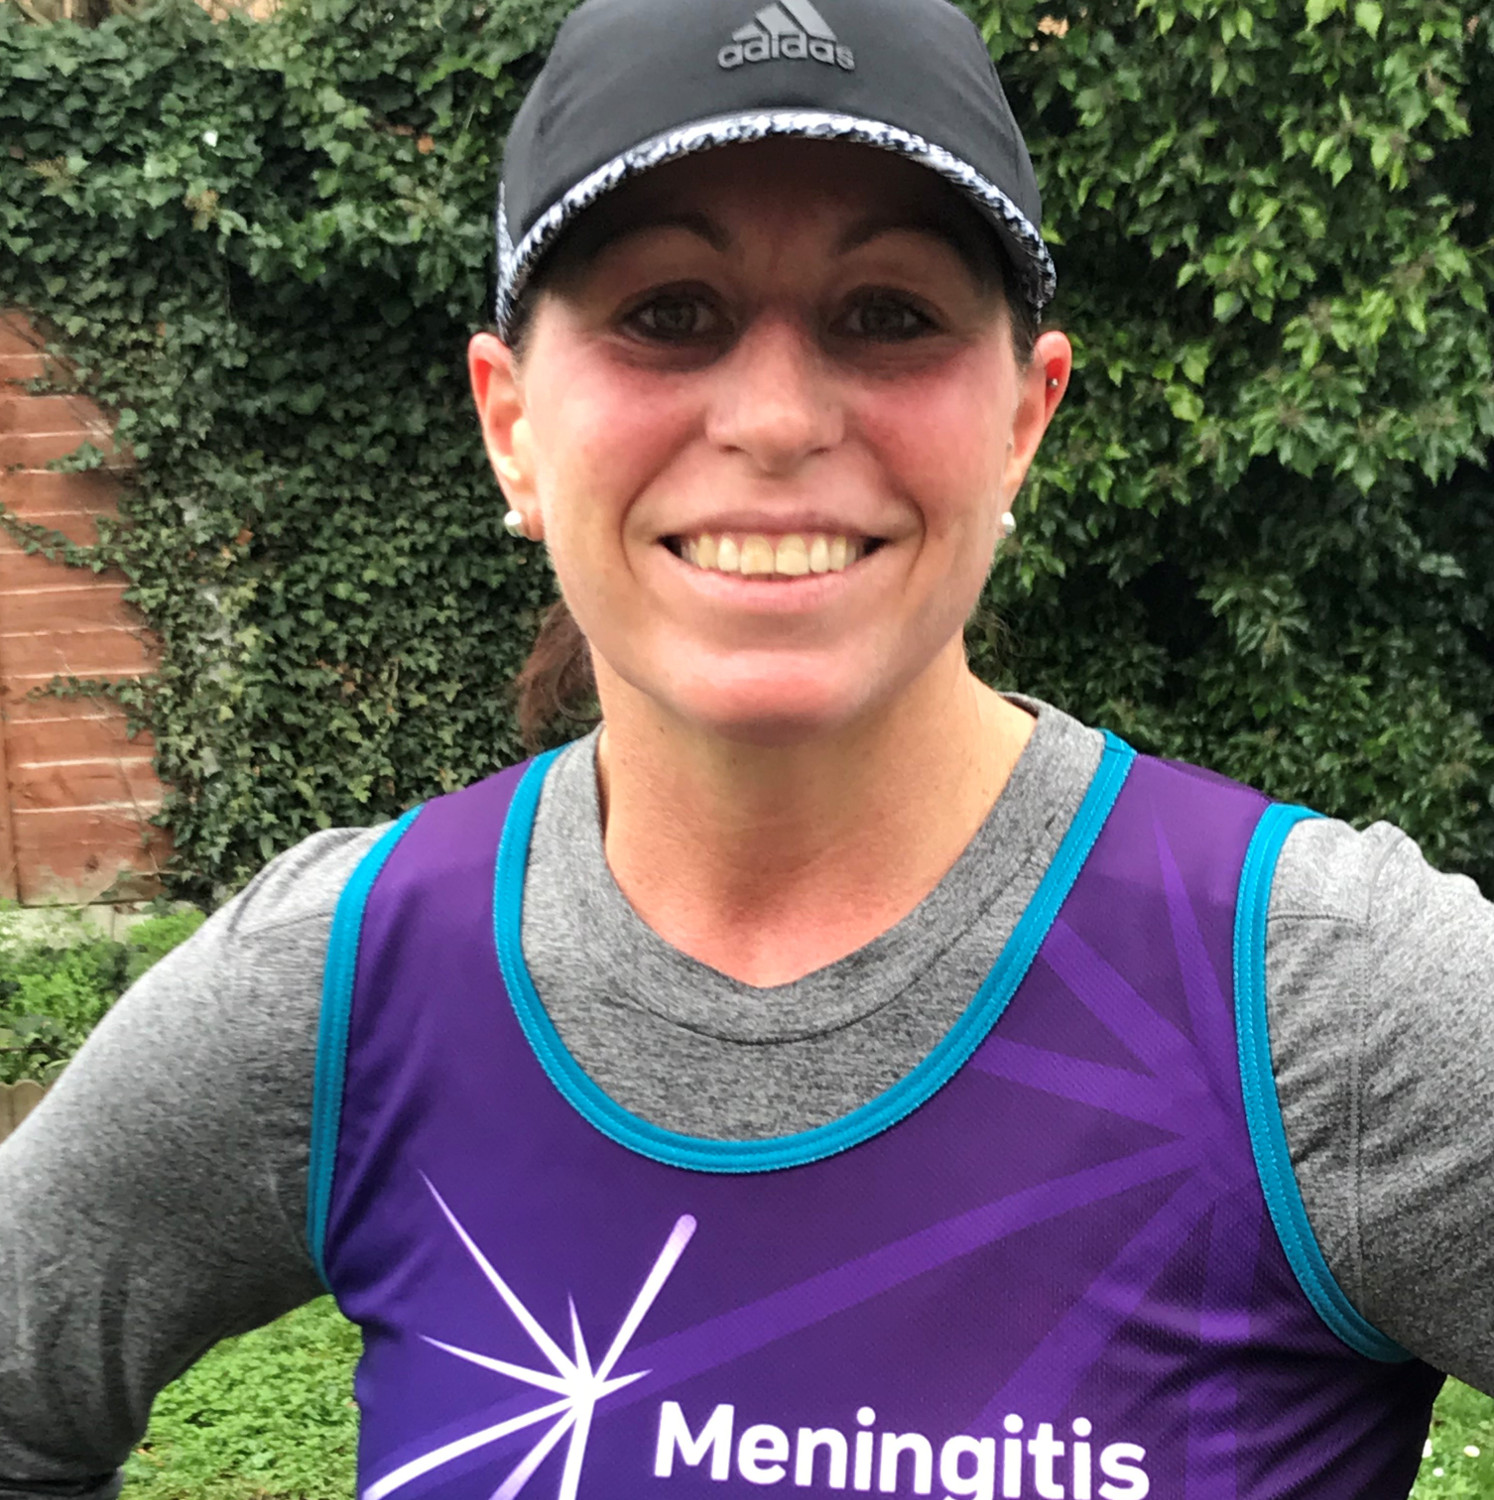 Natalie gets ready to take on the London Marathon for her meningitis survivor